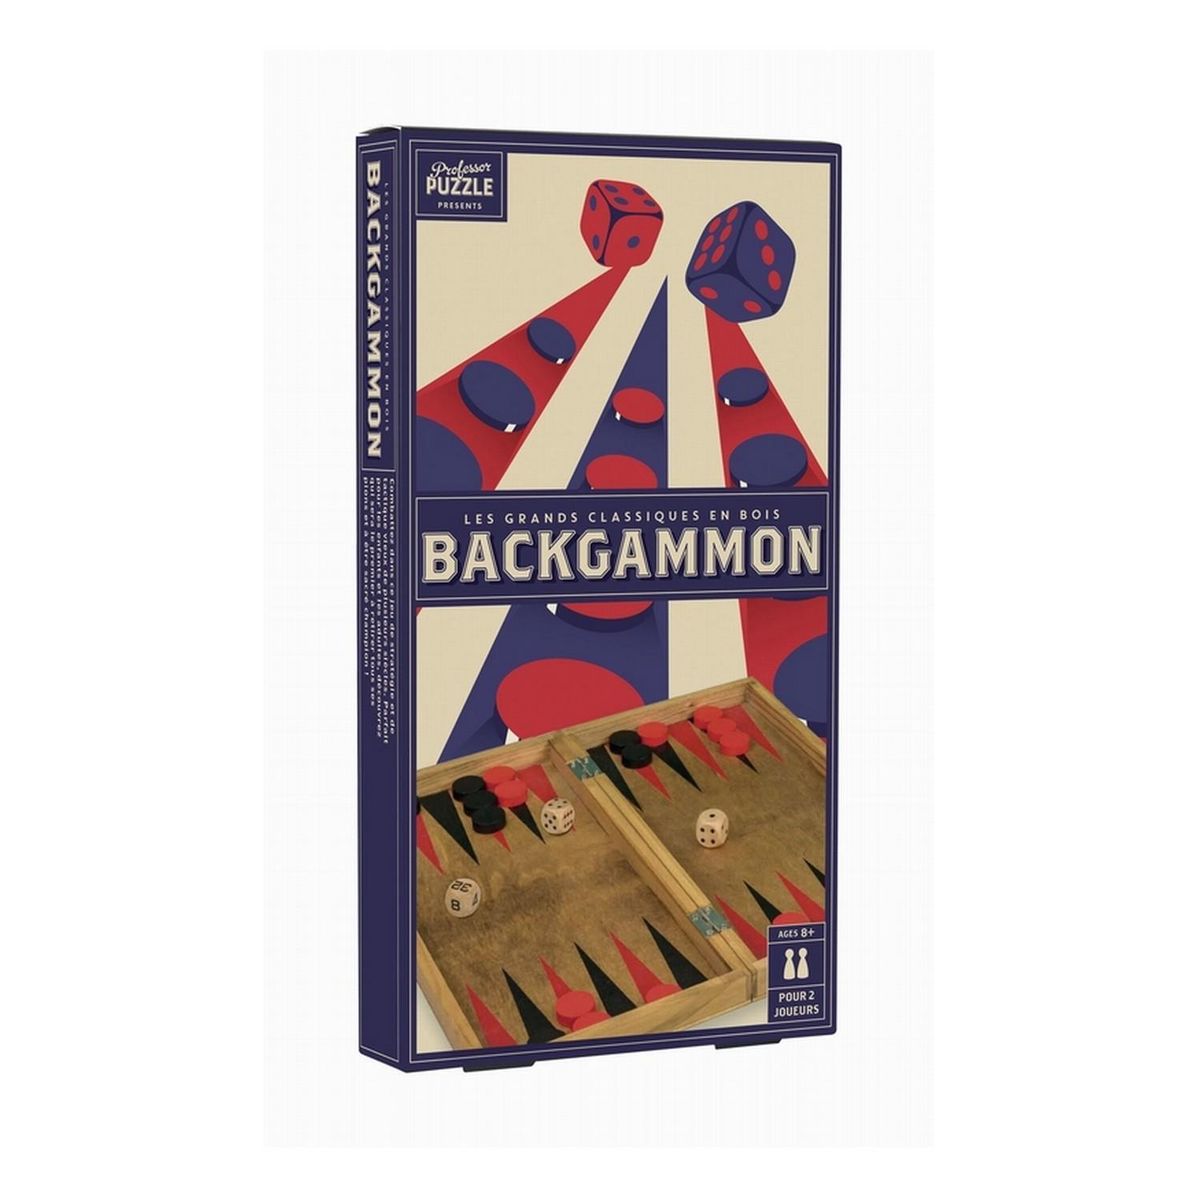 Backgammon - Pliable en bois type Wenge, 30 cm